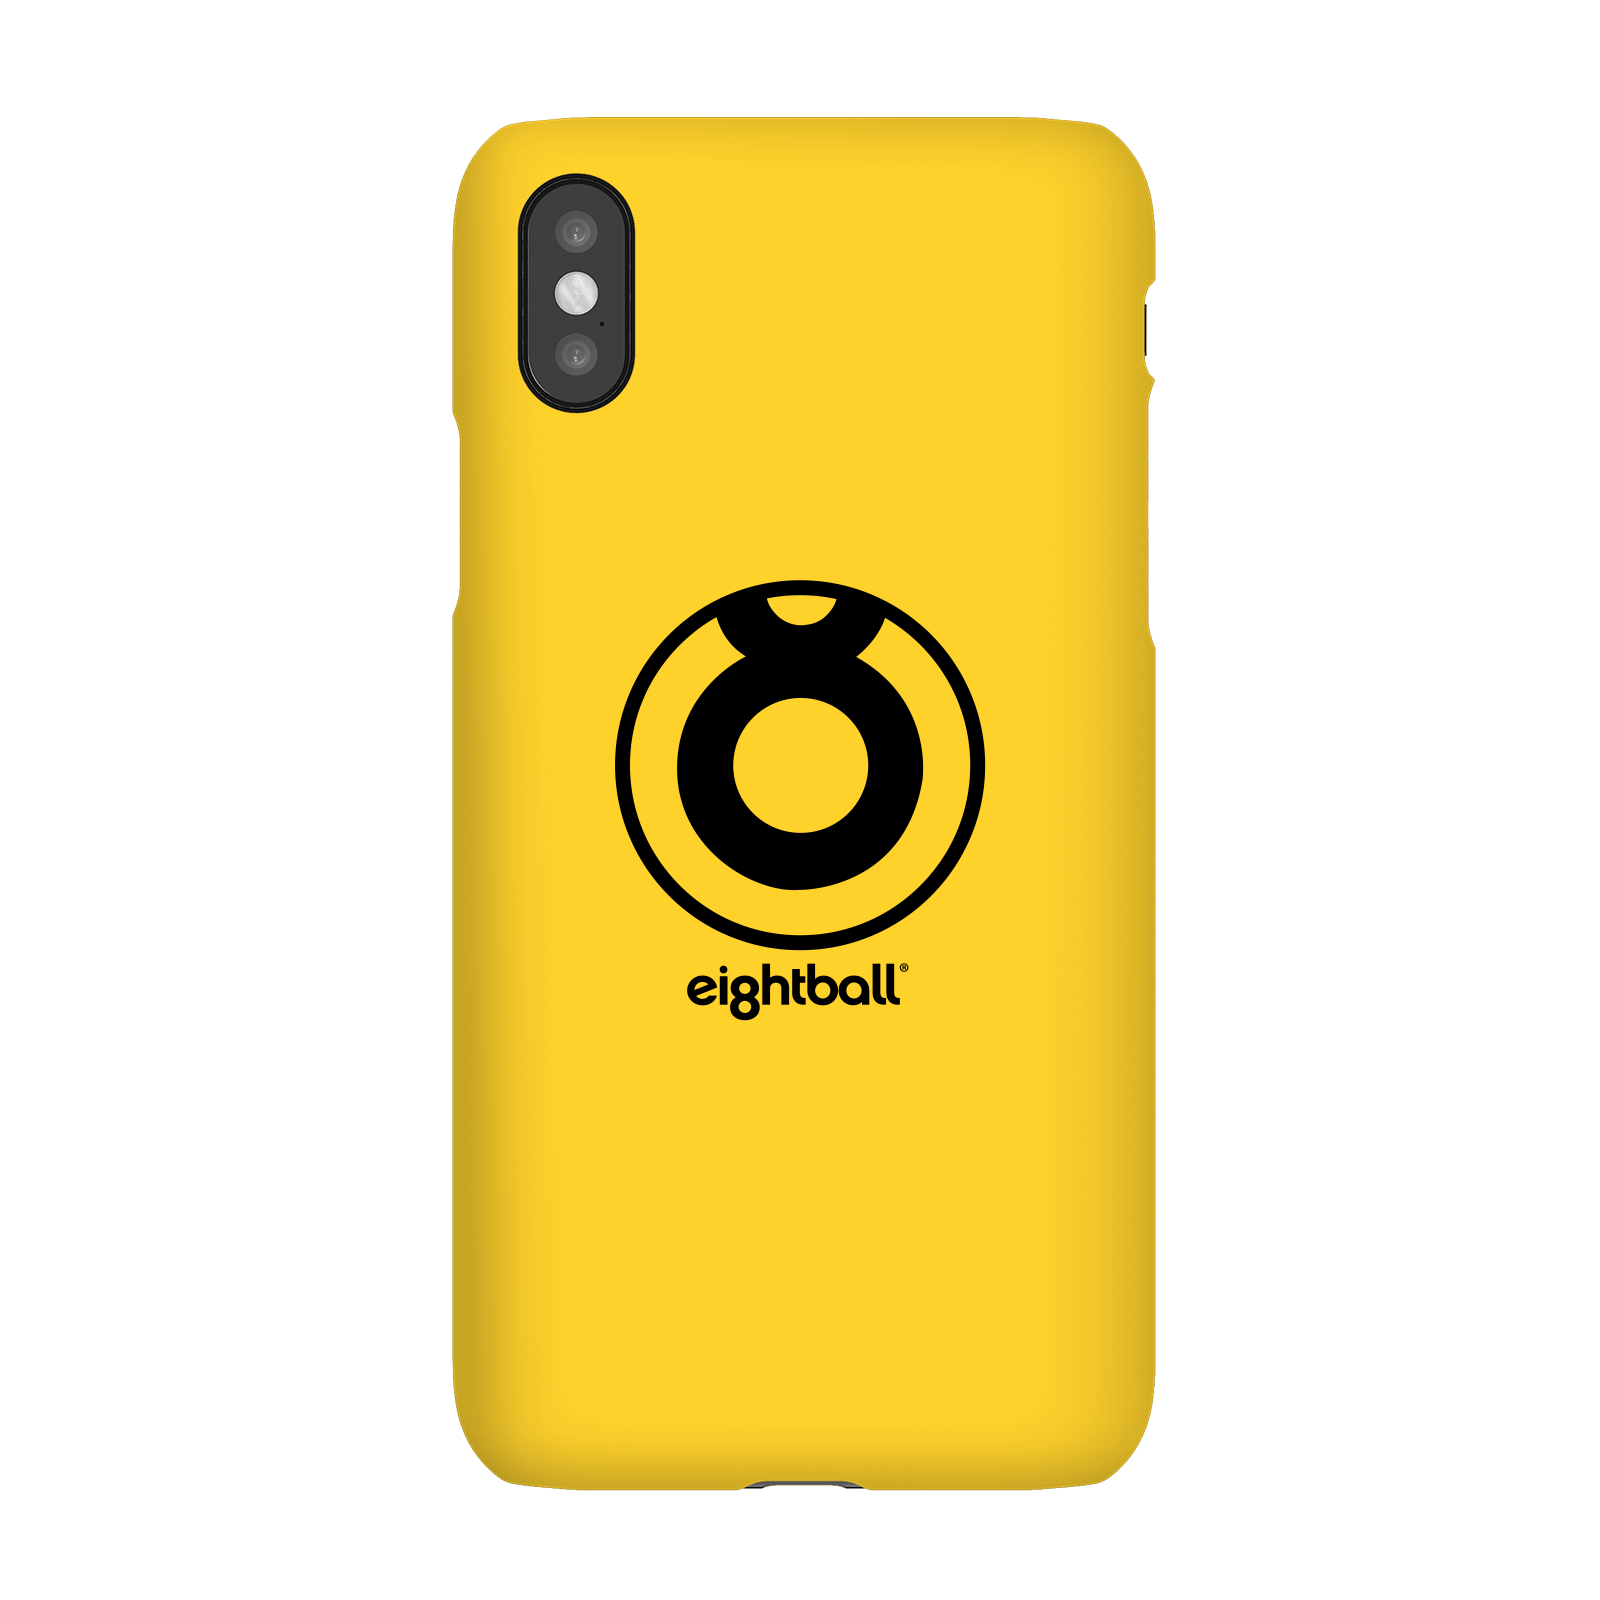 Funda Móvil Ei8htball Large Circle Logo para iPhone y Android - iPhone X - Carcasa rígida - Mate